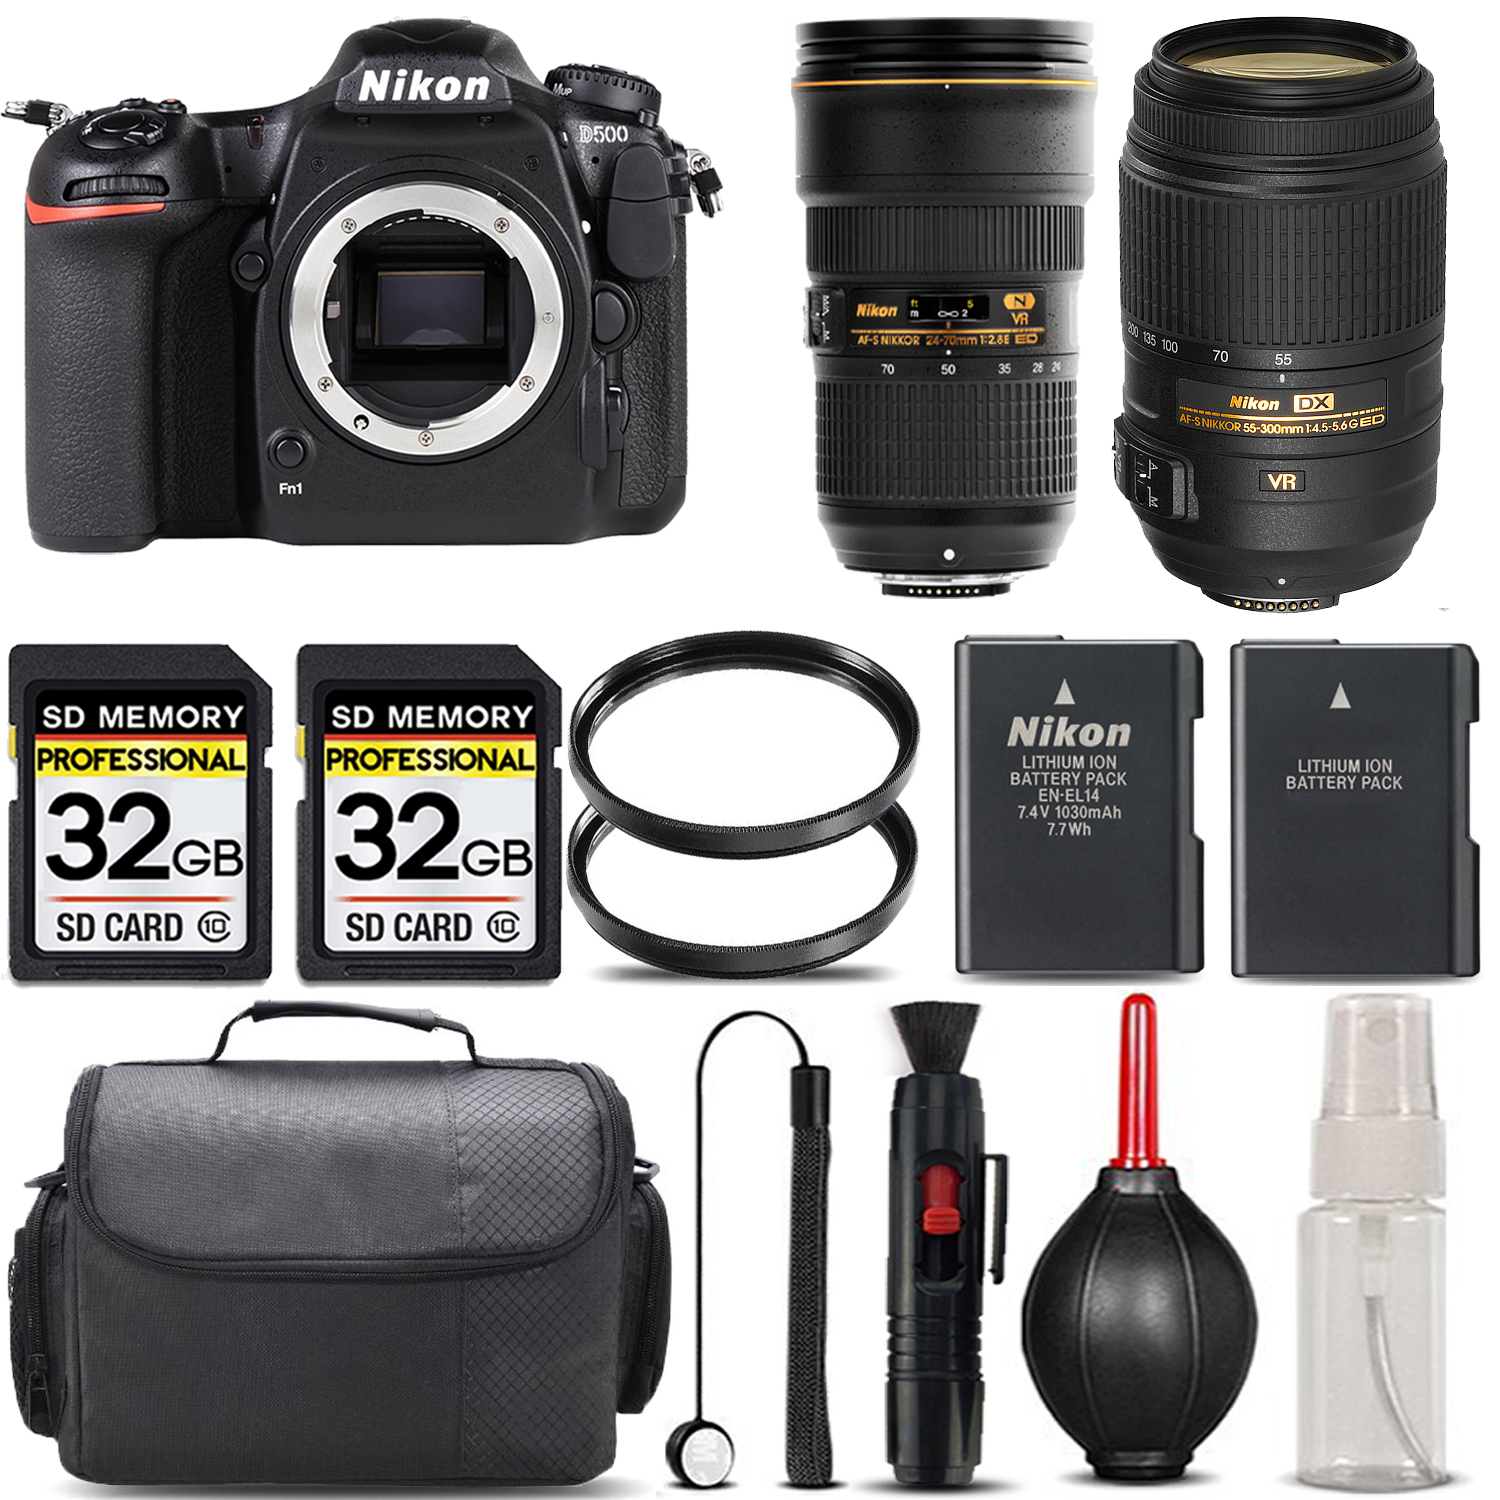 D500 DSLR Camera + 55- 300mm Lens + 24-70mm Lens + Handbag - SAVE BIG KIT *FREE SHIPPING*